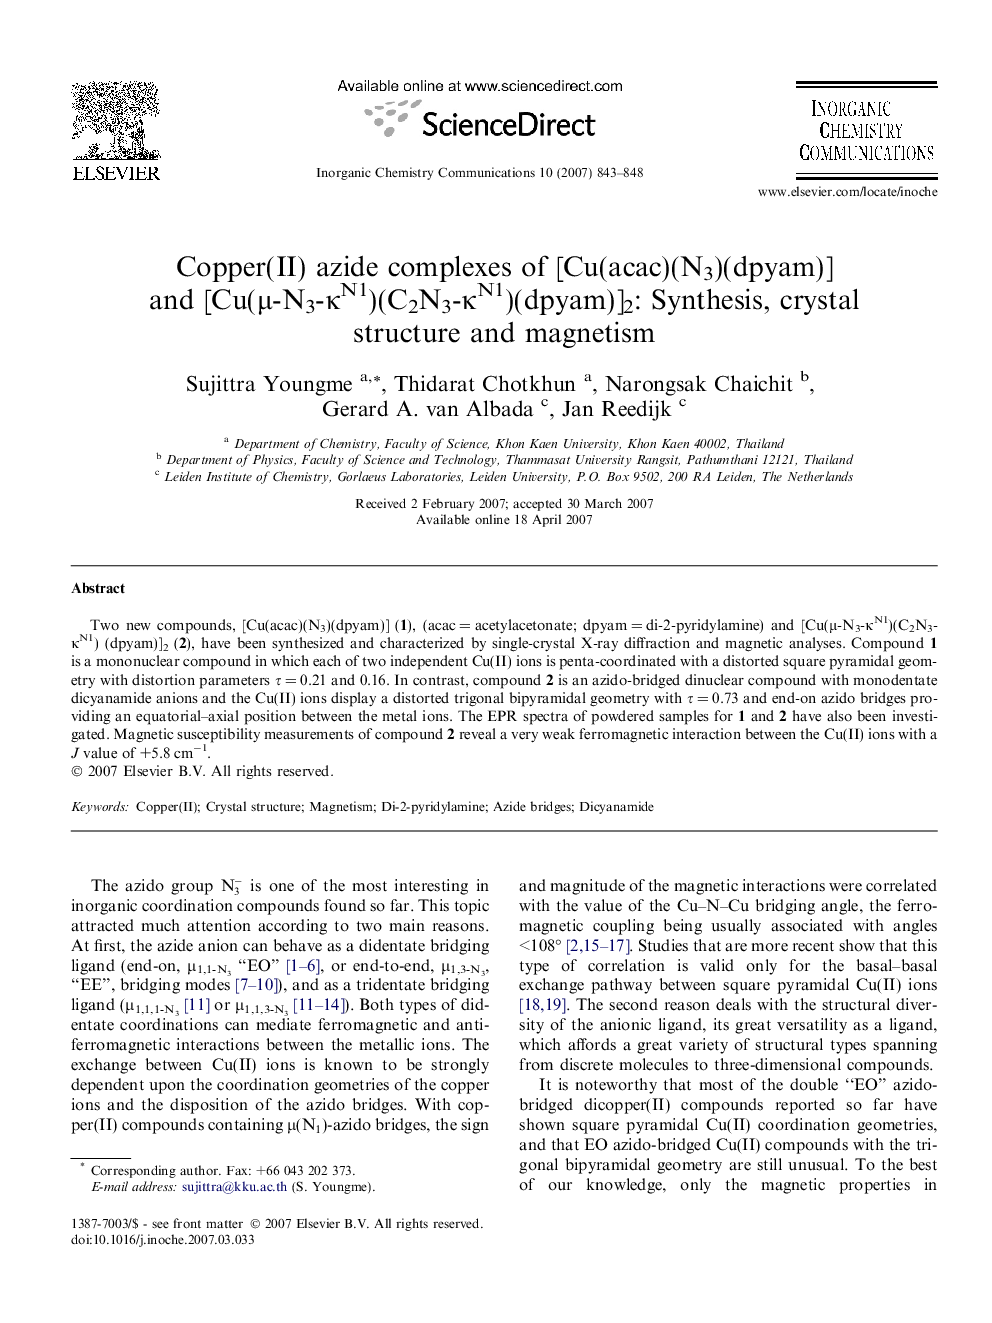 Copper(II) azide complexes of [Cu(acac)(N3)(dpyam)] and [Cu(Î¼-N3-ÎºN1)(C2N3-ÎºN1)(dpyam)]2: Synthesis, crystal structure and magnetism